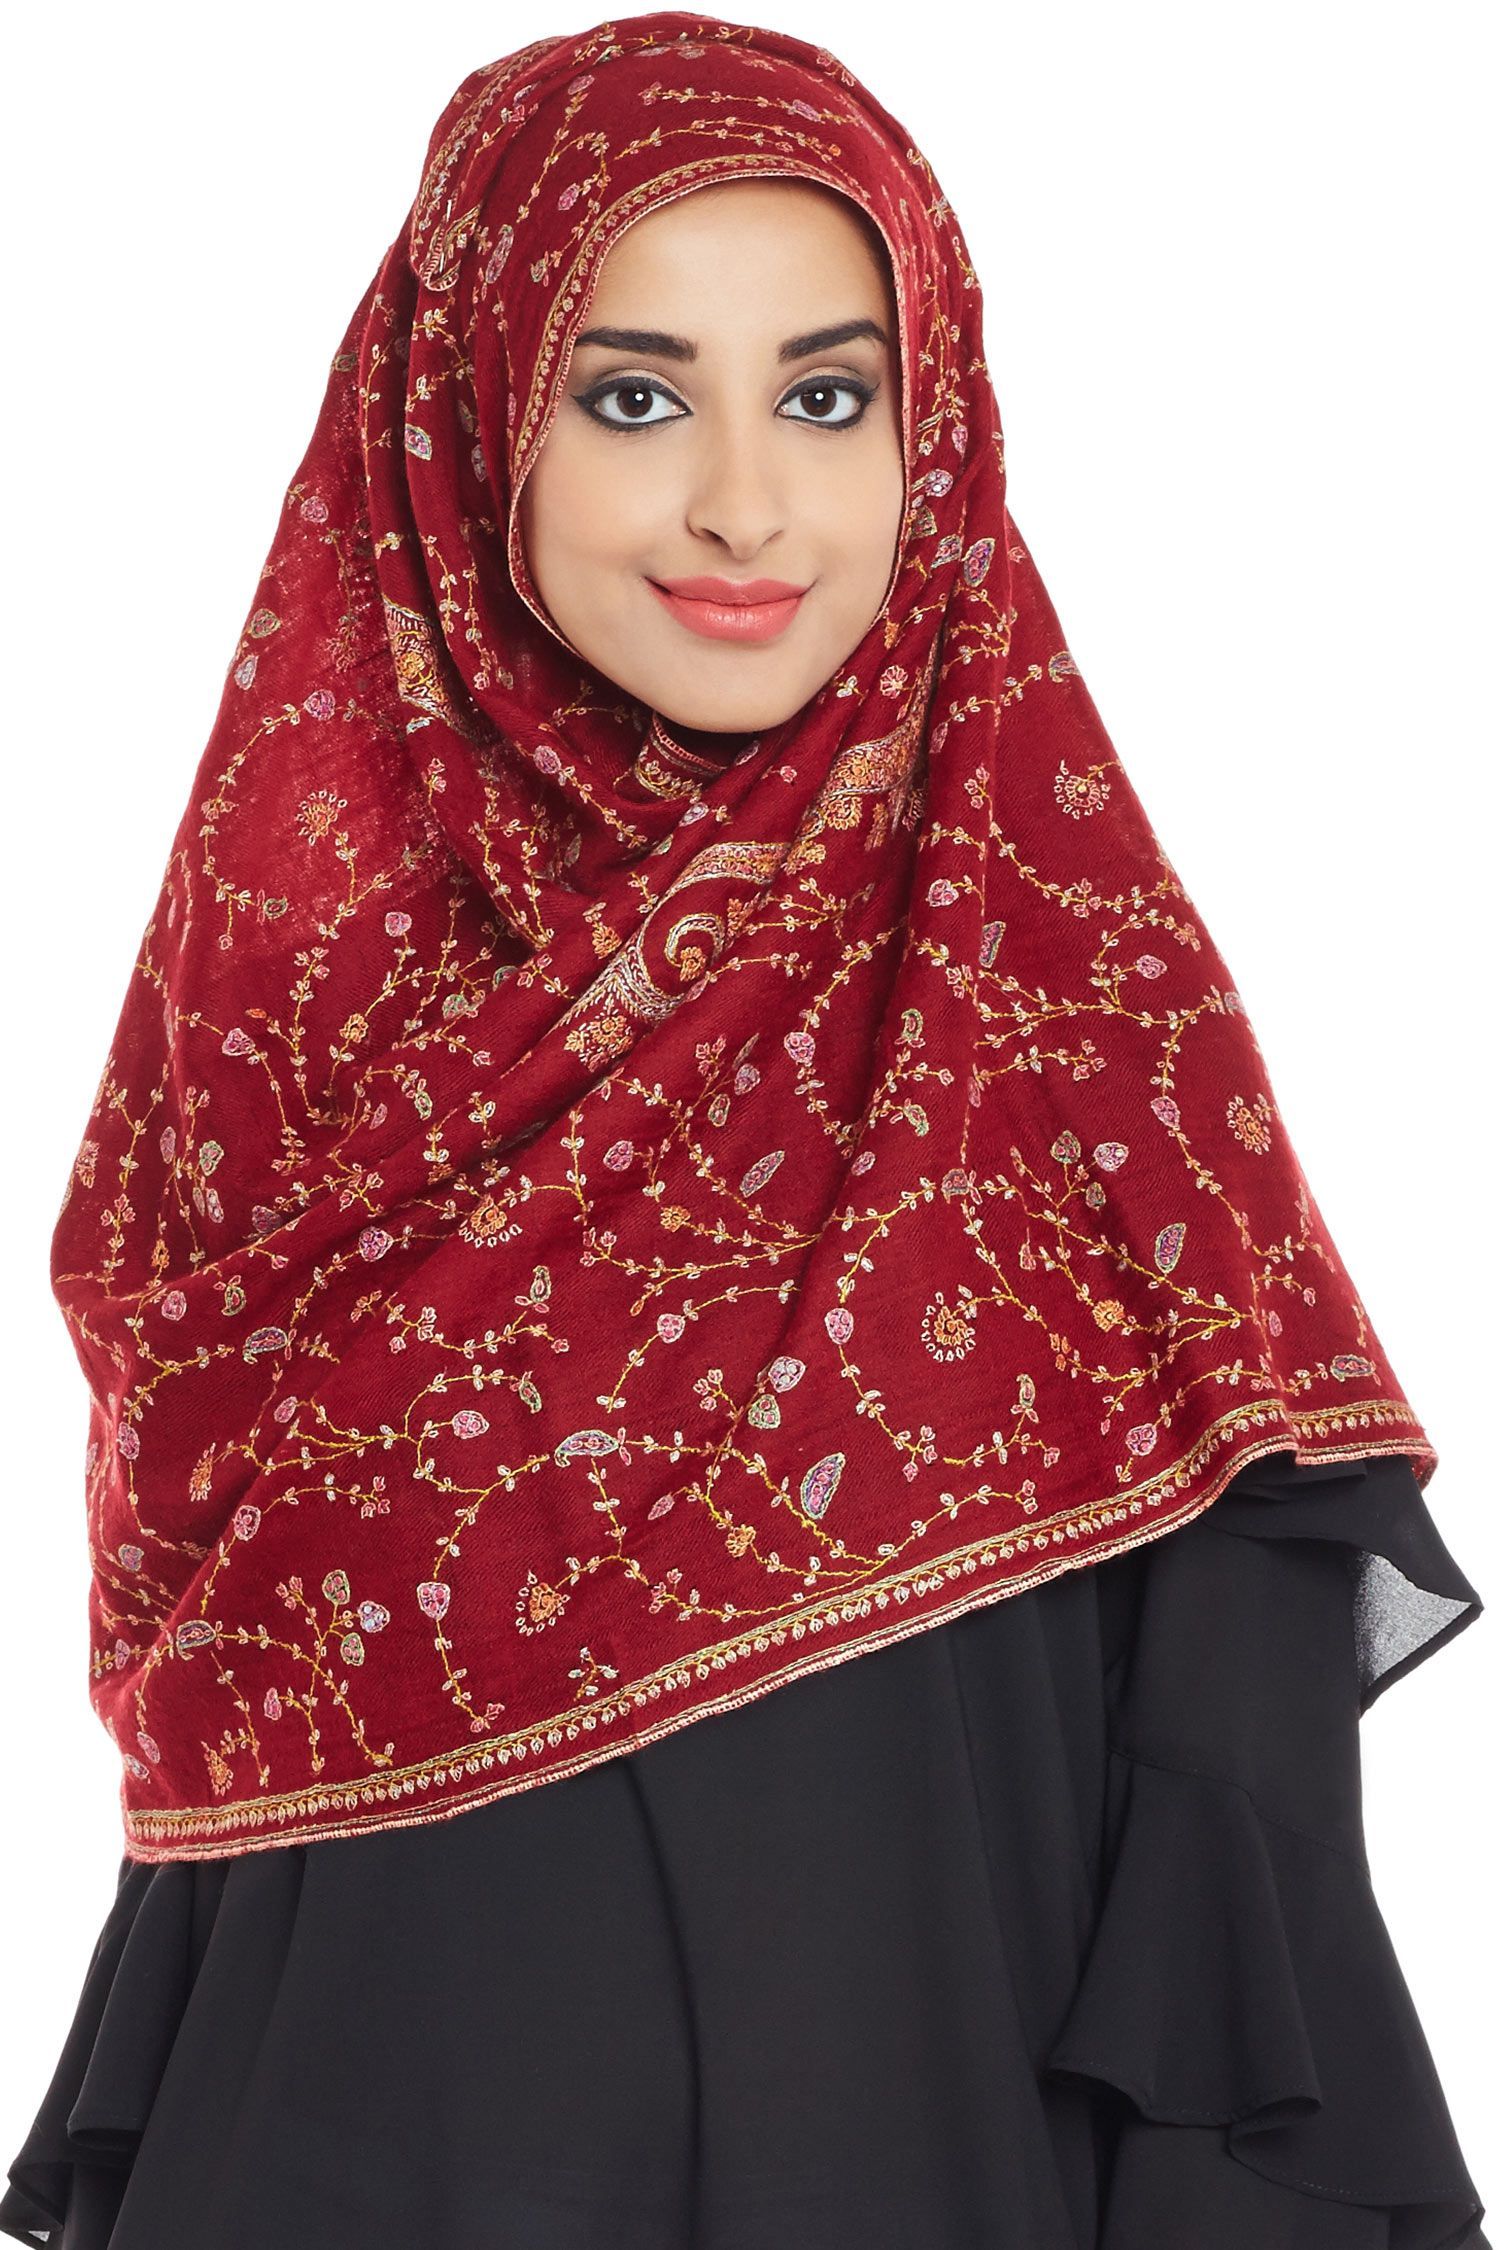 The Elongated Paisley Hijab